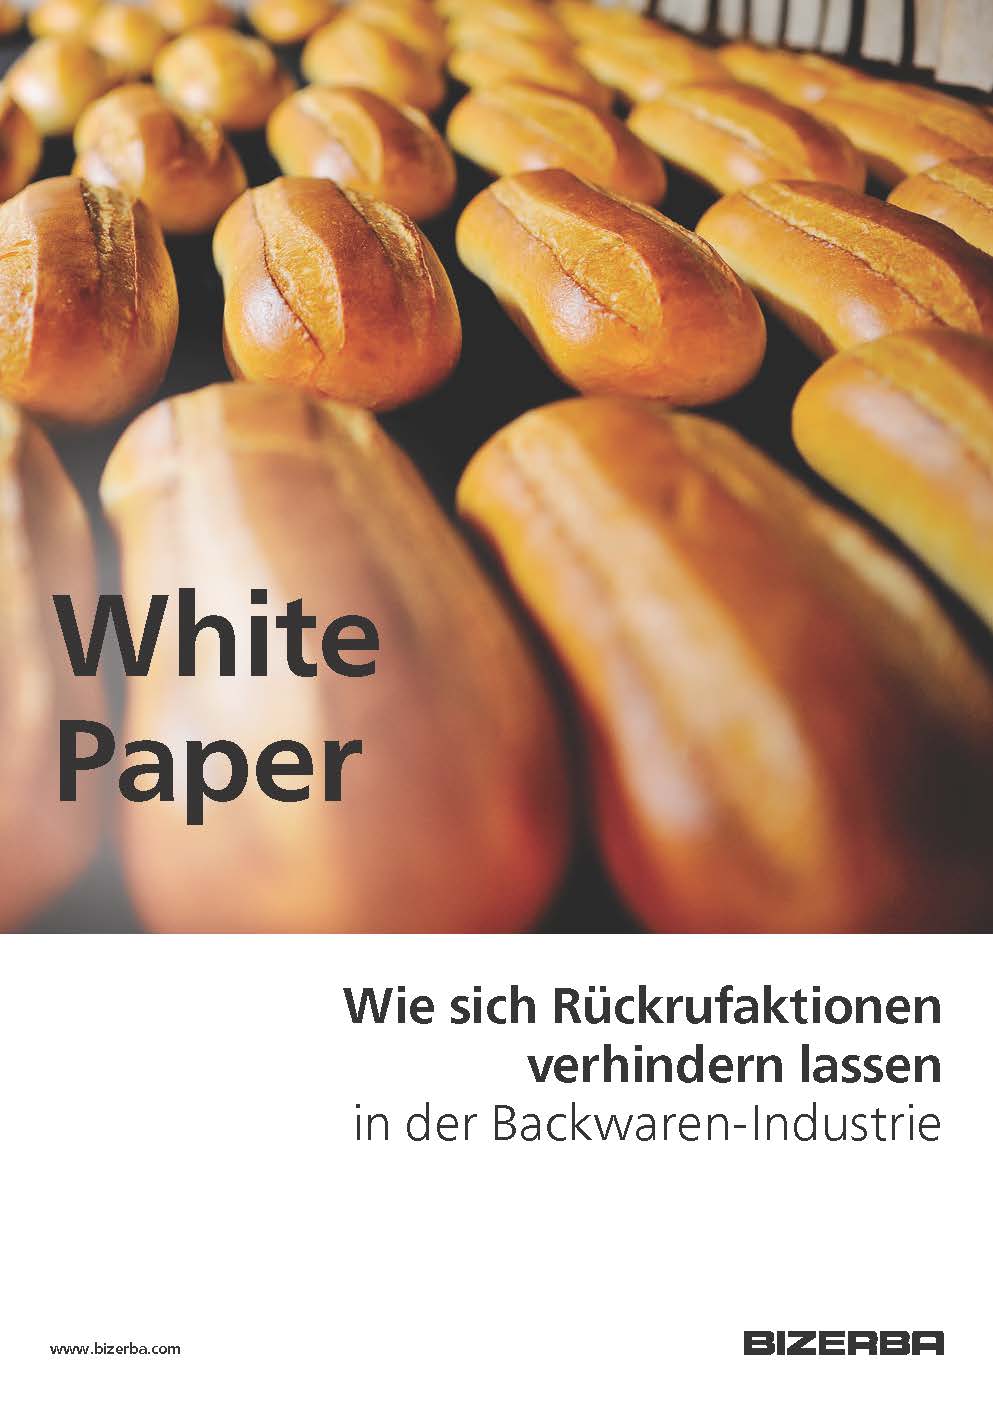 Whitepaper Rueckruf Backwaren